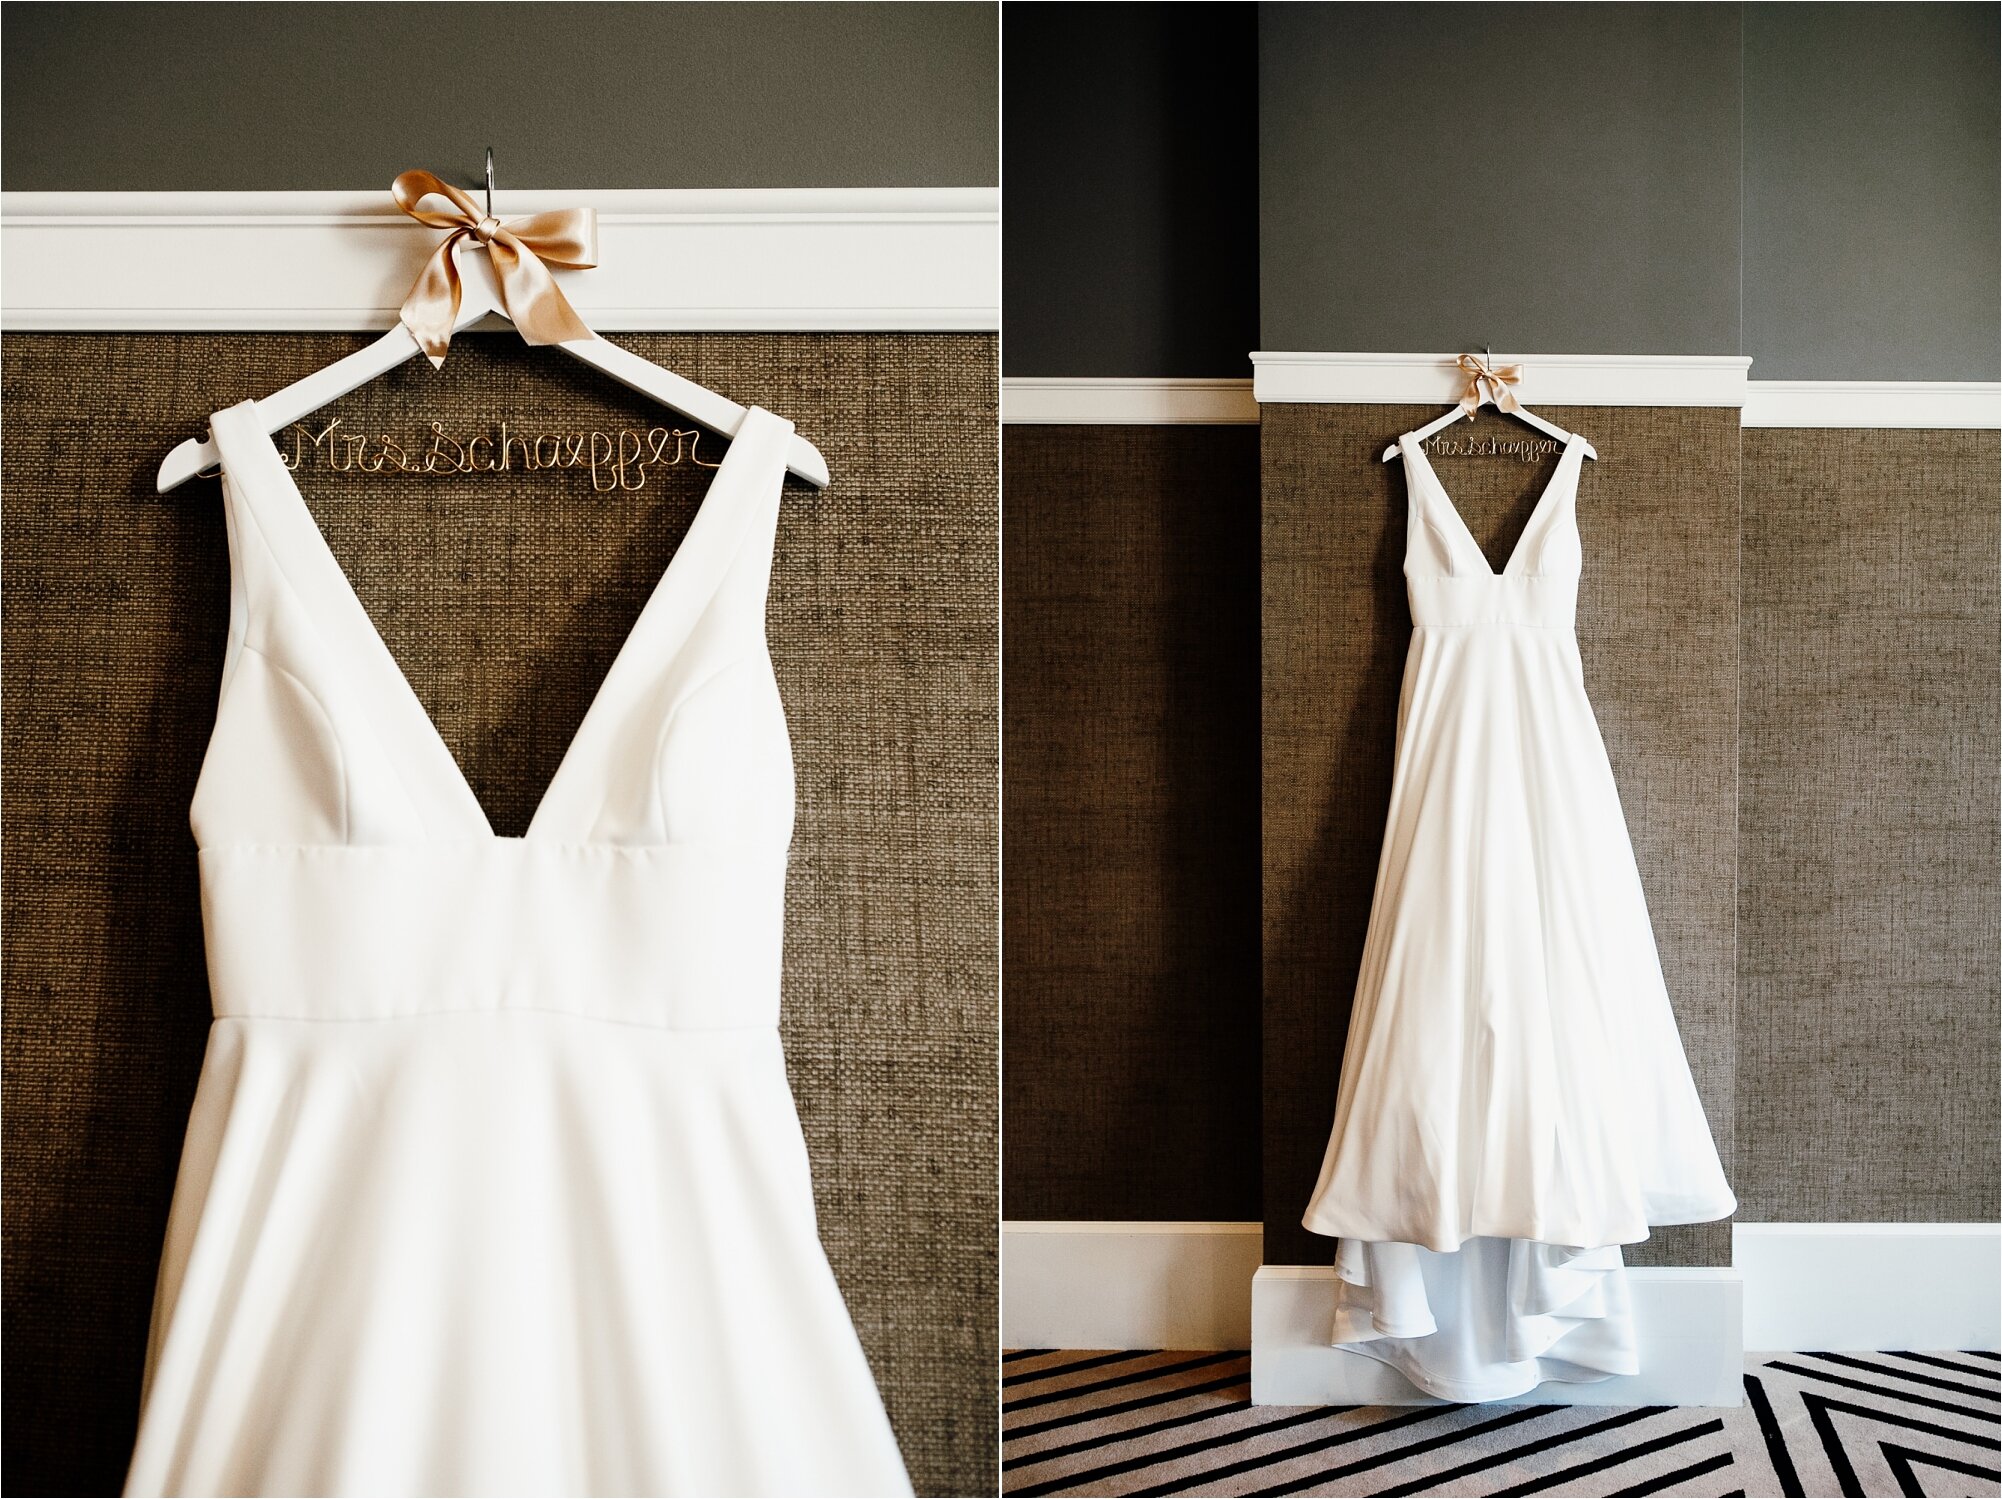  wedding dress hanging on personalized hanger  